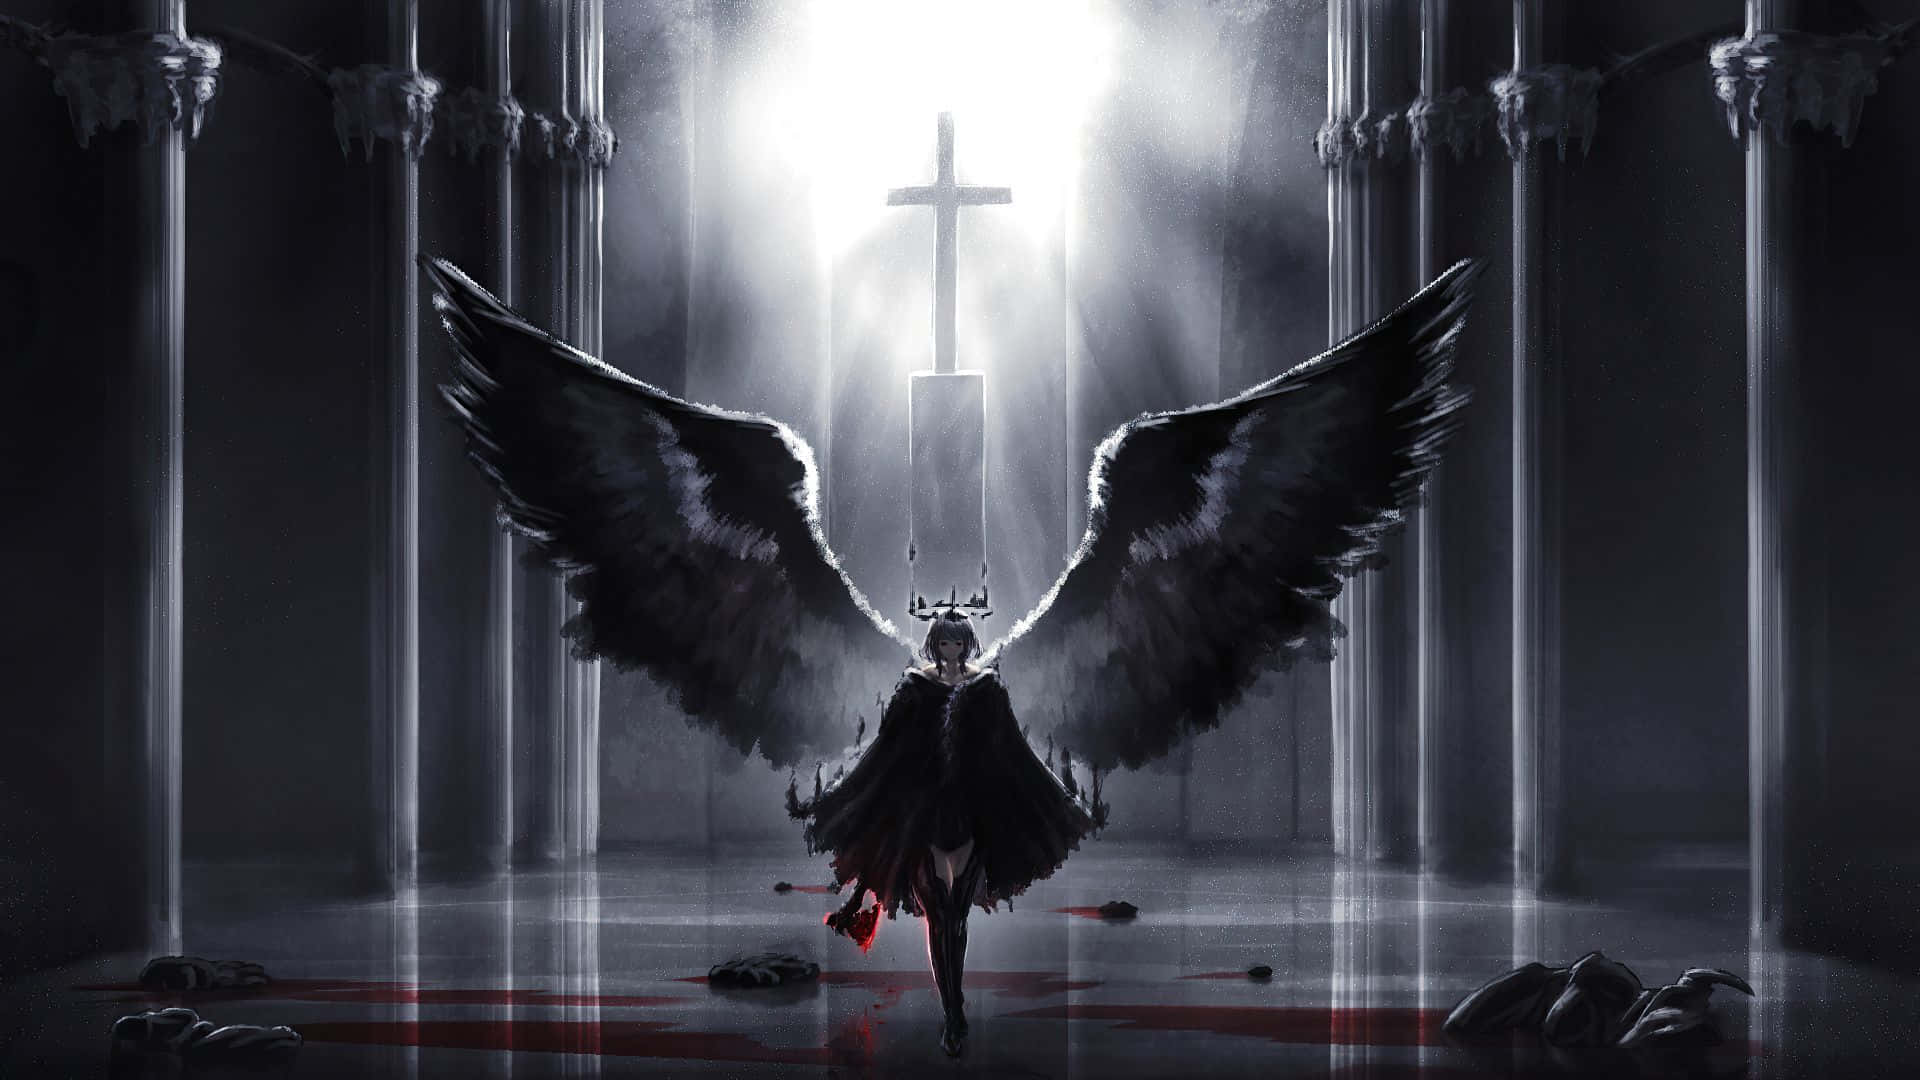 "Feel the magic of black angel wings and soar away!"